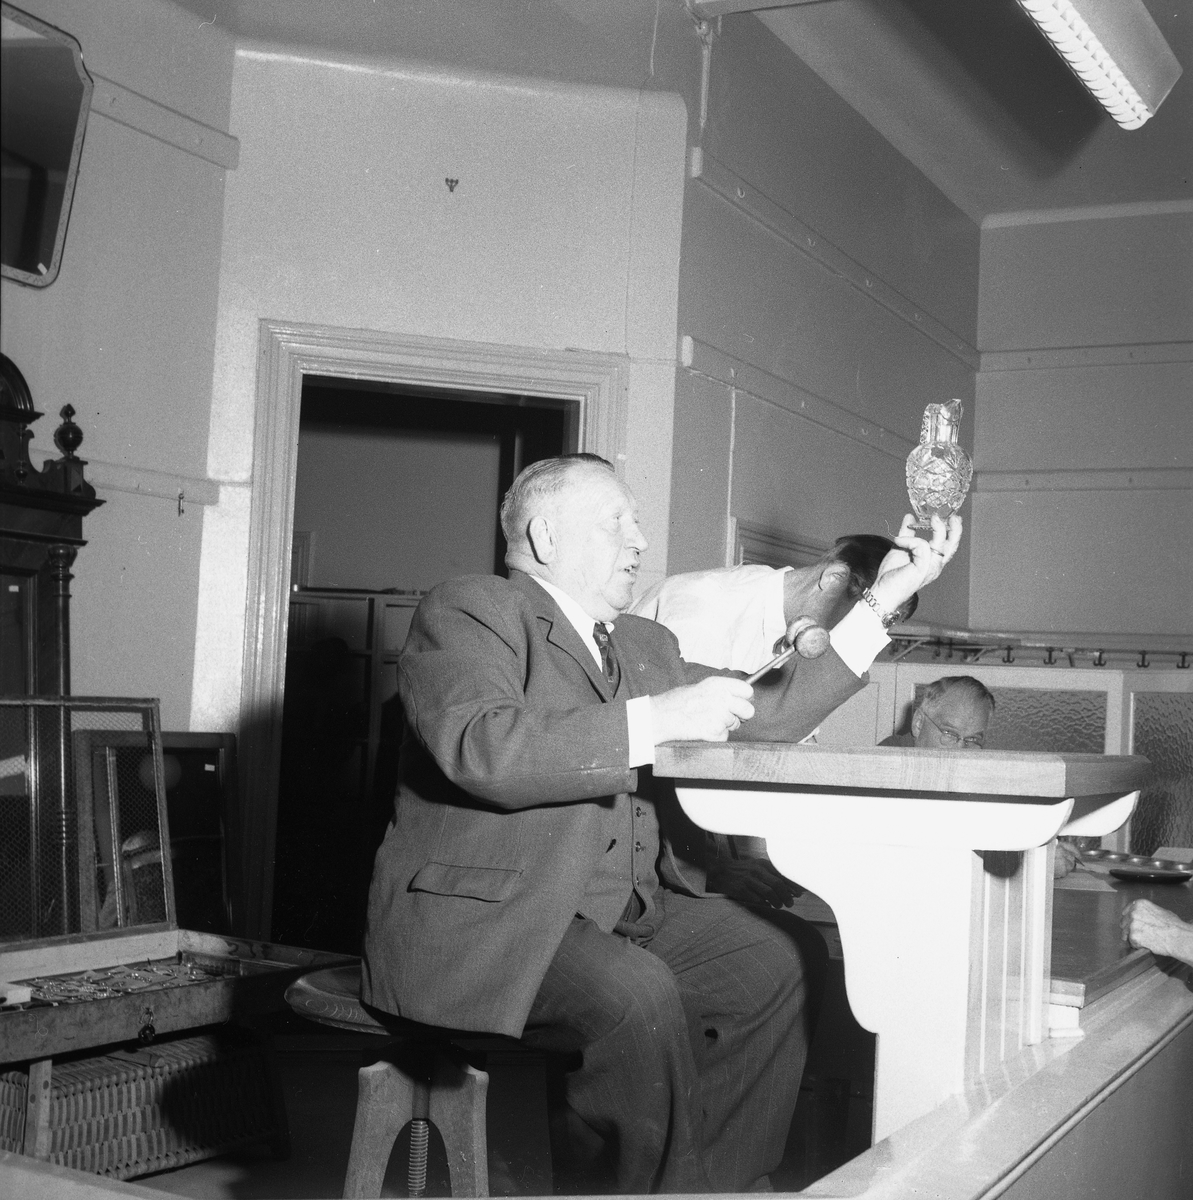 Auktionskammaren, södra teatern.
15 oktober 1955.